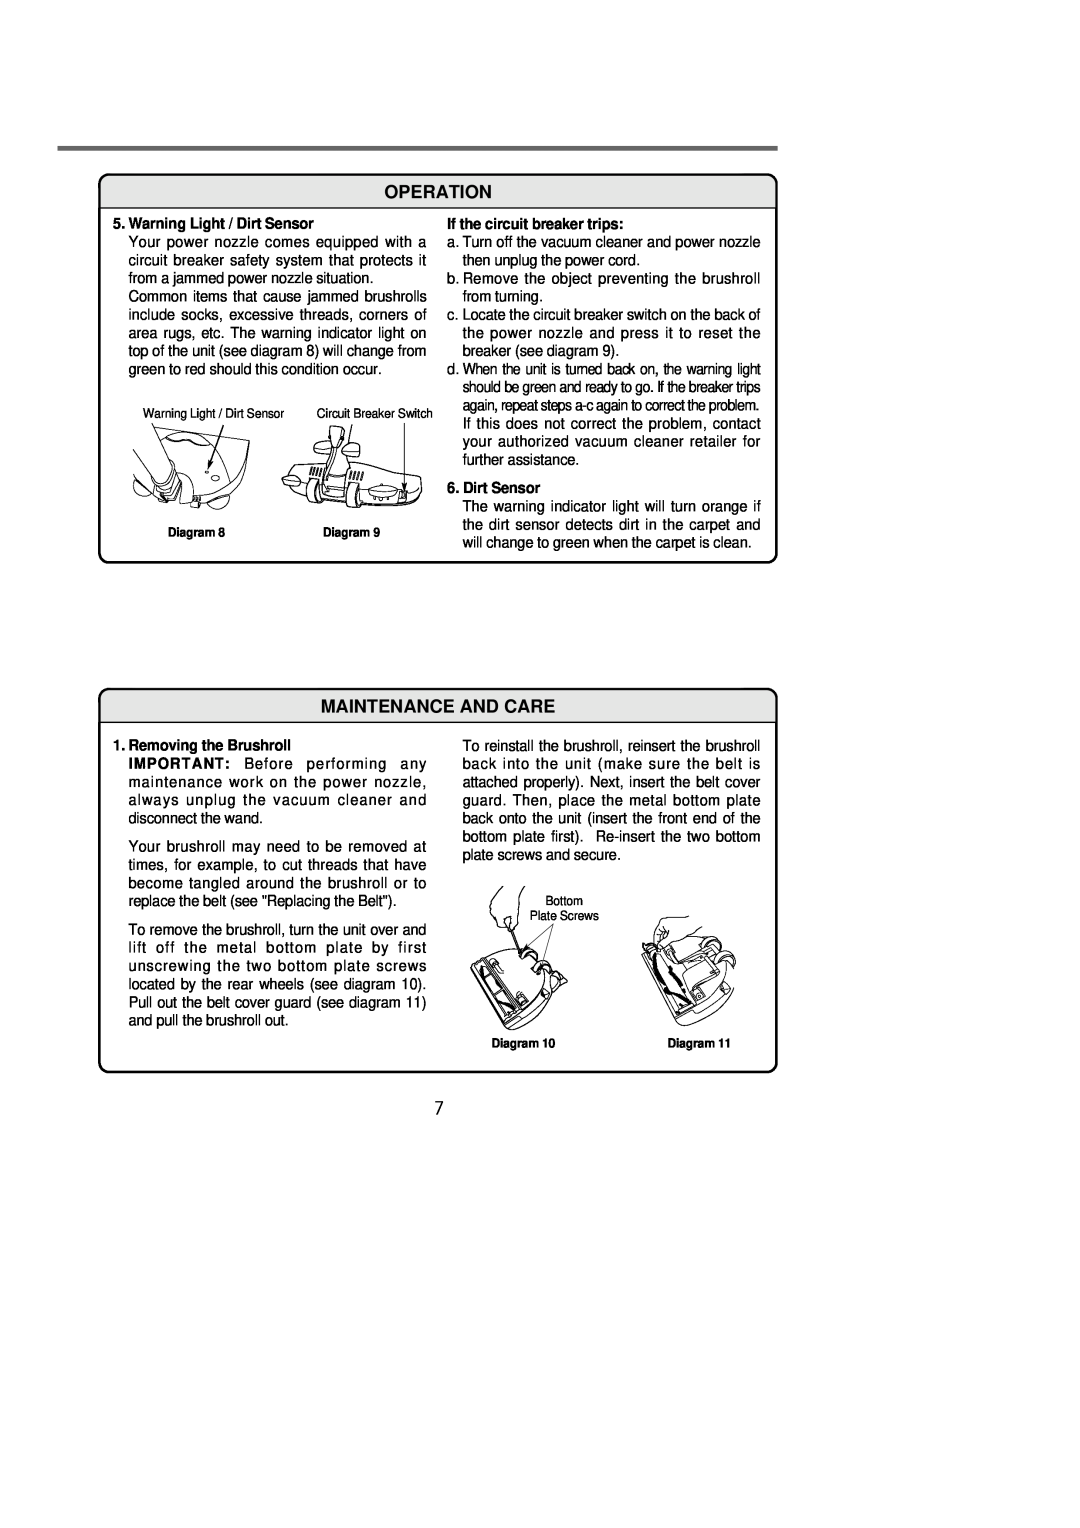 Riccar 1800 manual Operation, Maintenance And Care, Warning Light / Dirt Sensor, If the circuit breaker trips 